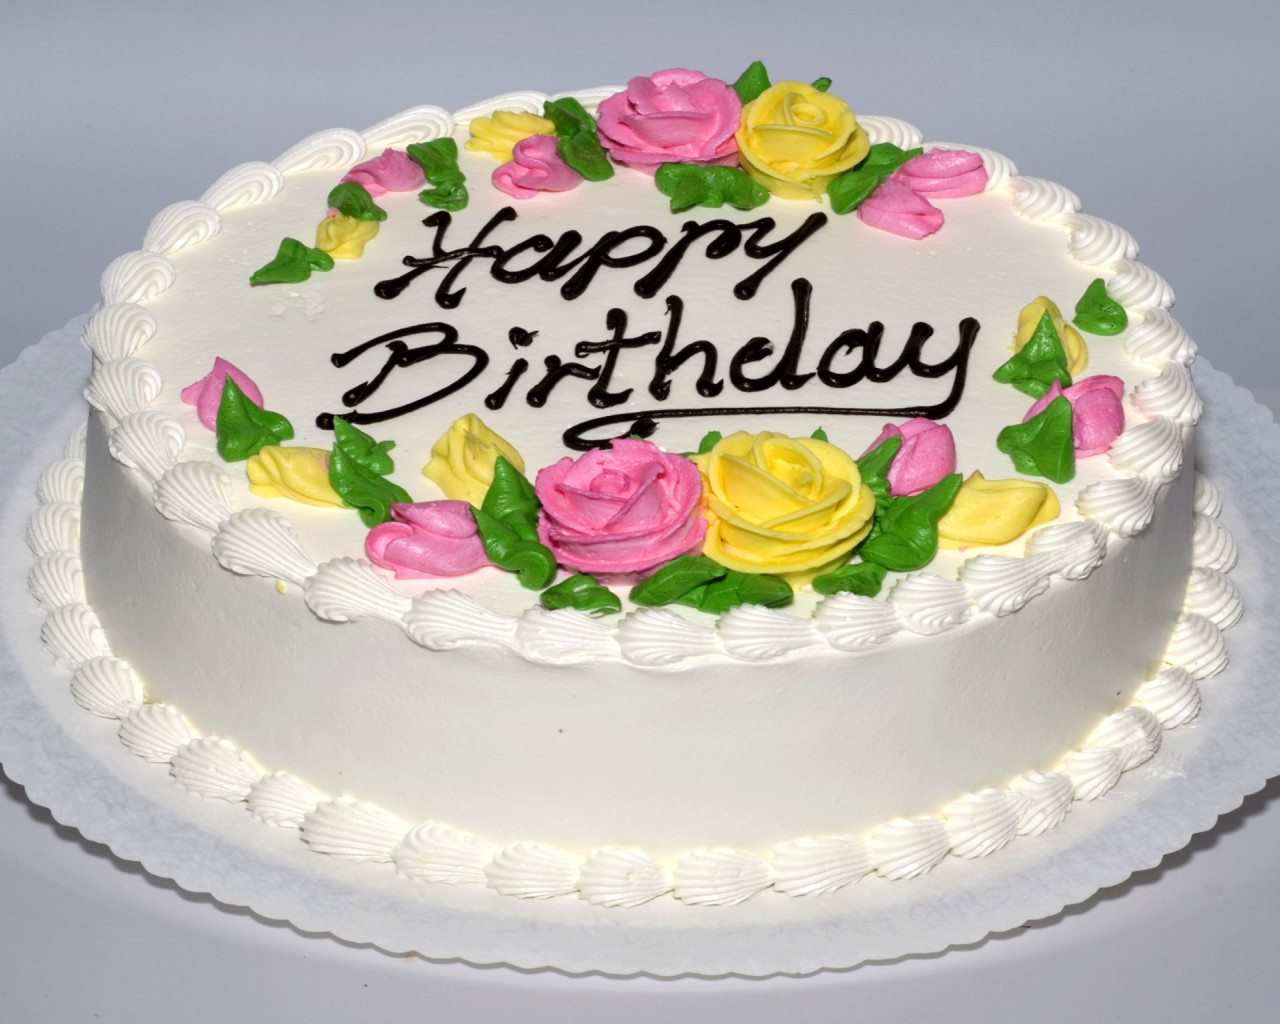 Beautiful birthday cake with roses